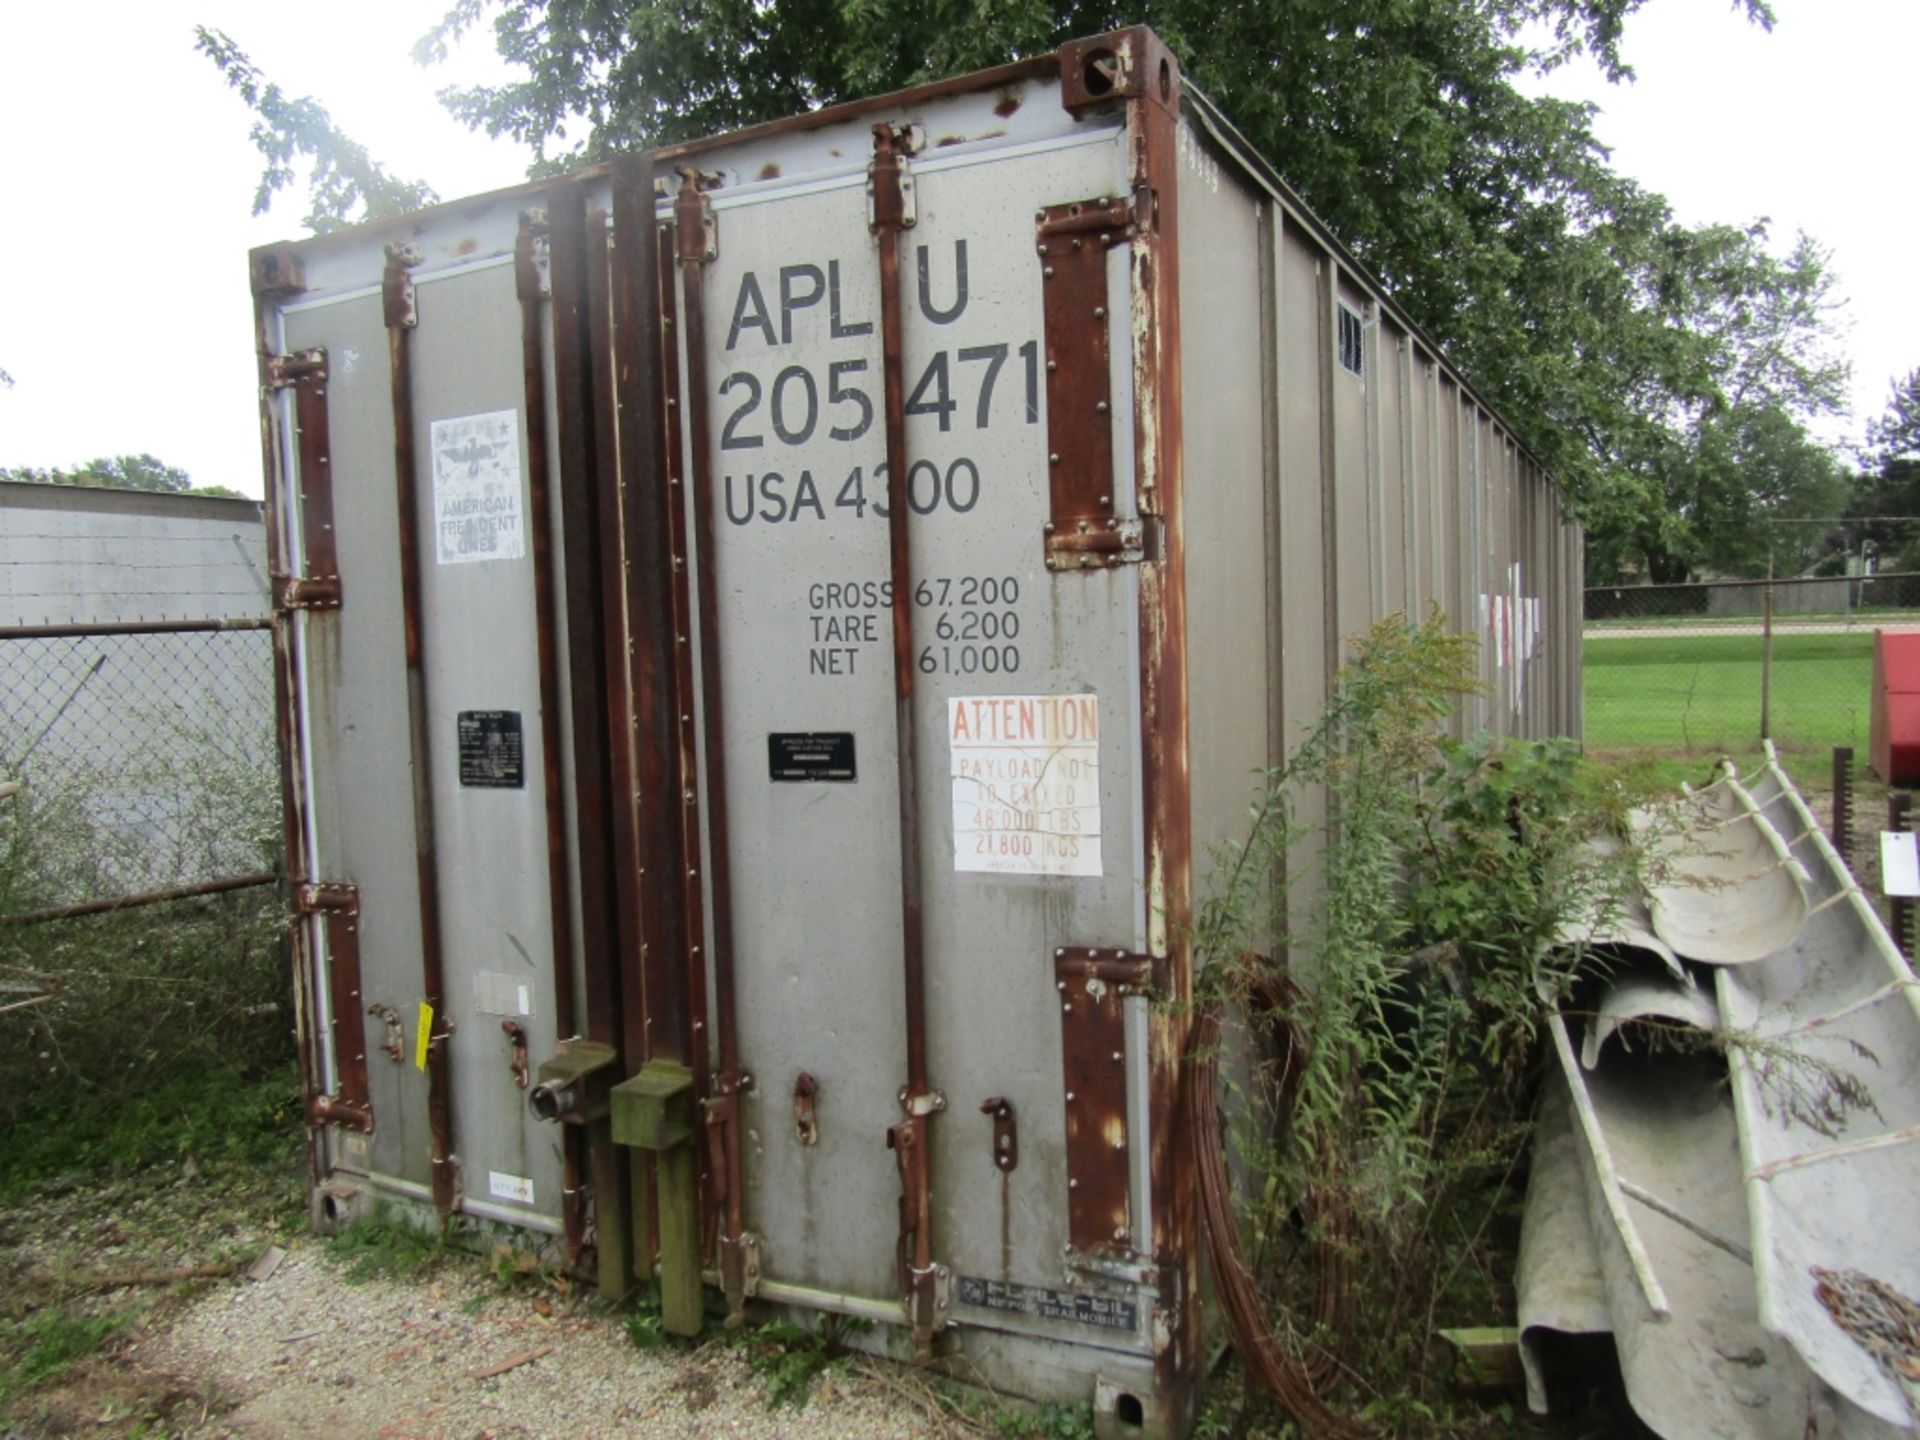 Storage Unit, Serial #APLU205471, Date of Manufacture 1974, Inside Dimension 94 5/16" x 92 1/2" x - Image 3 of 4